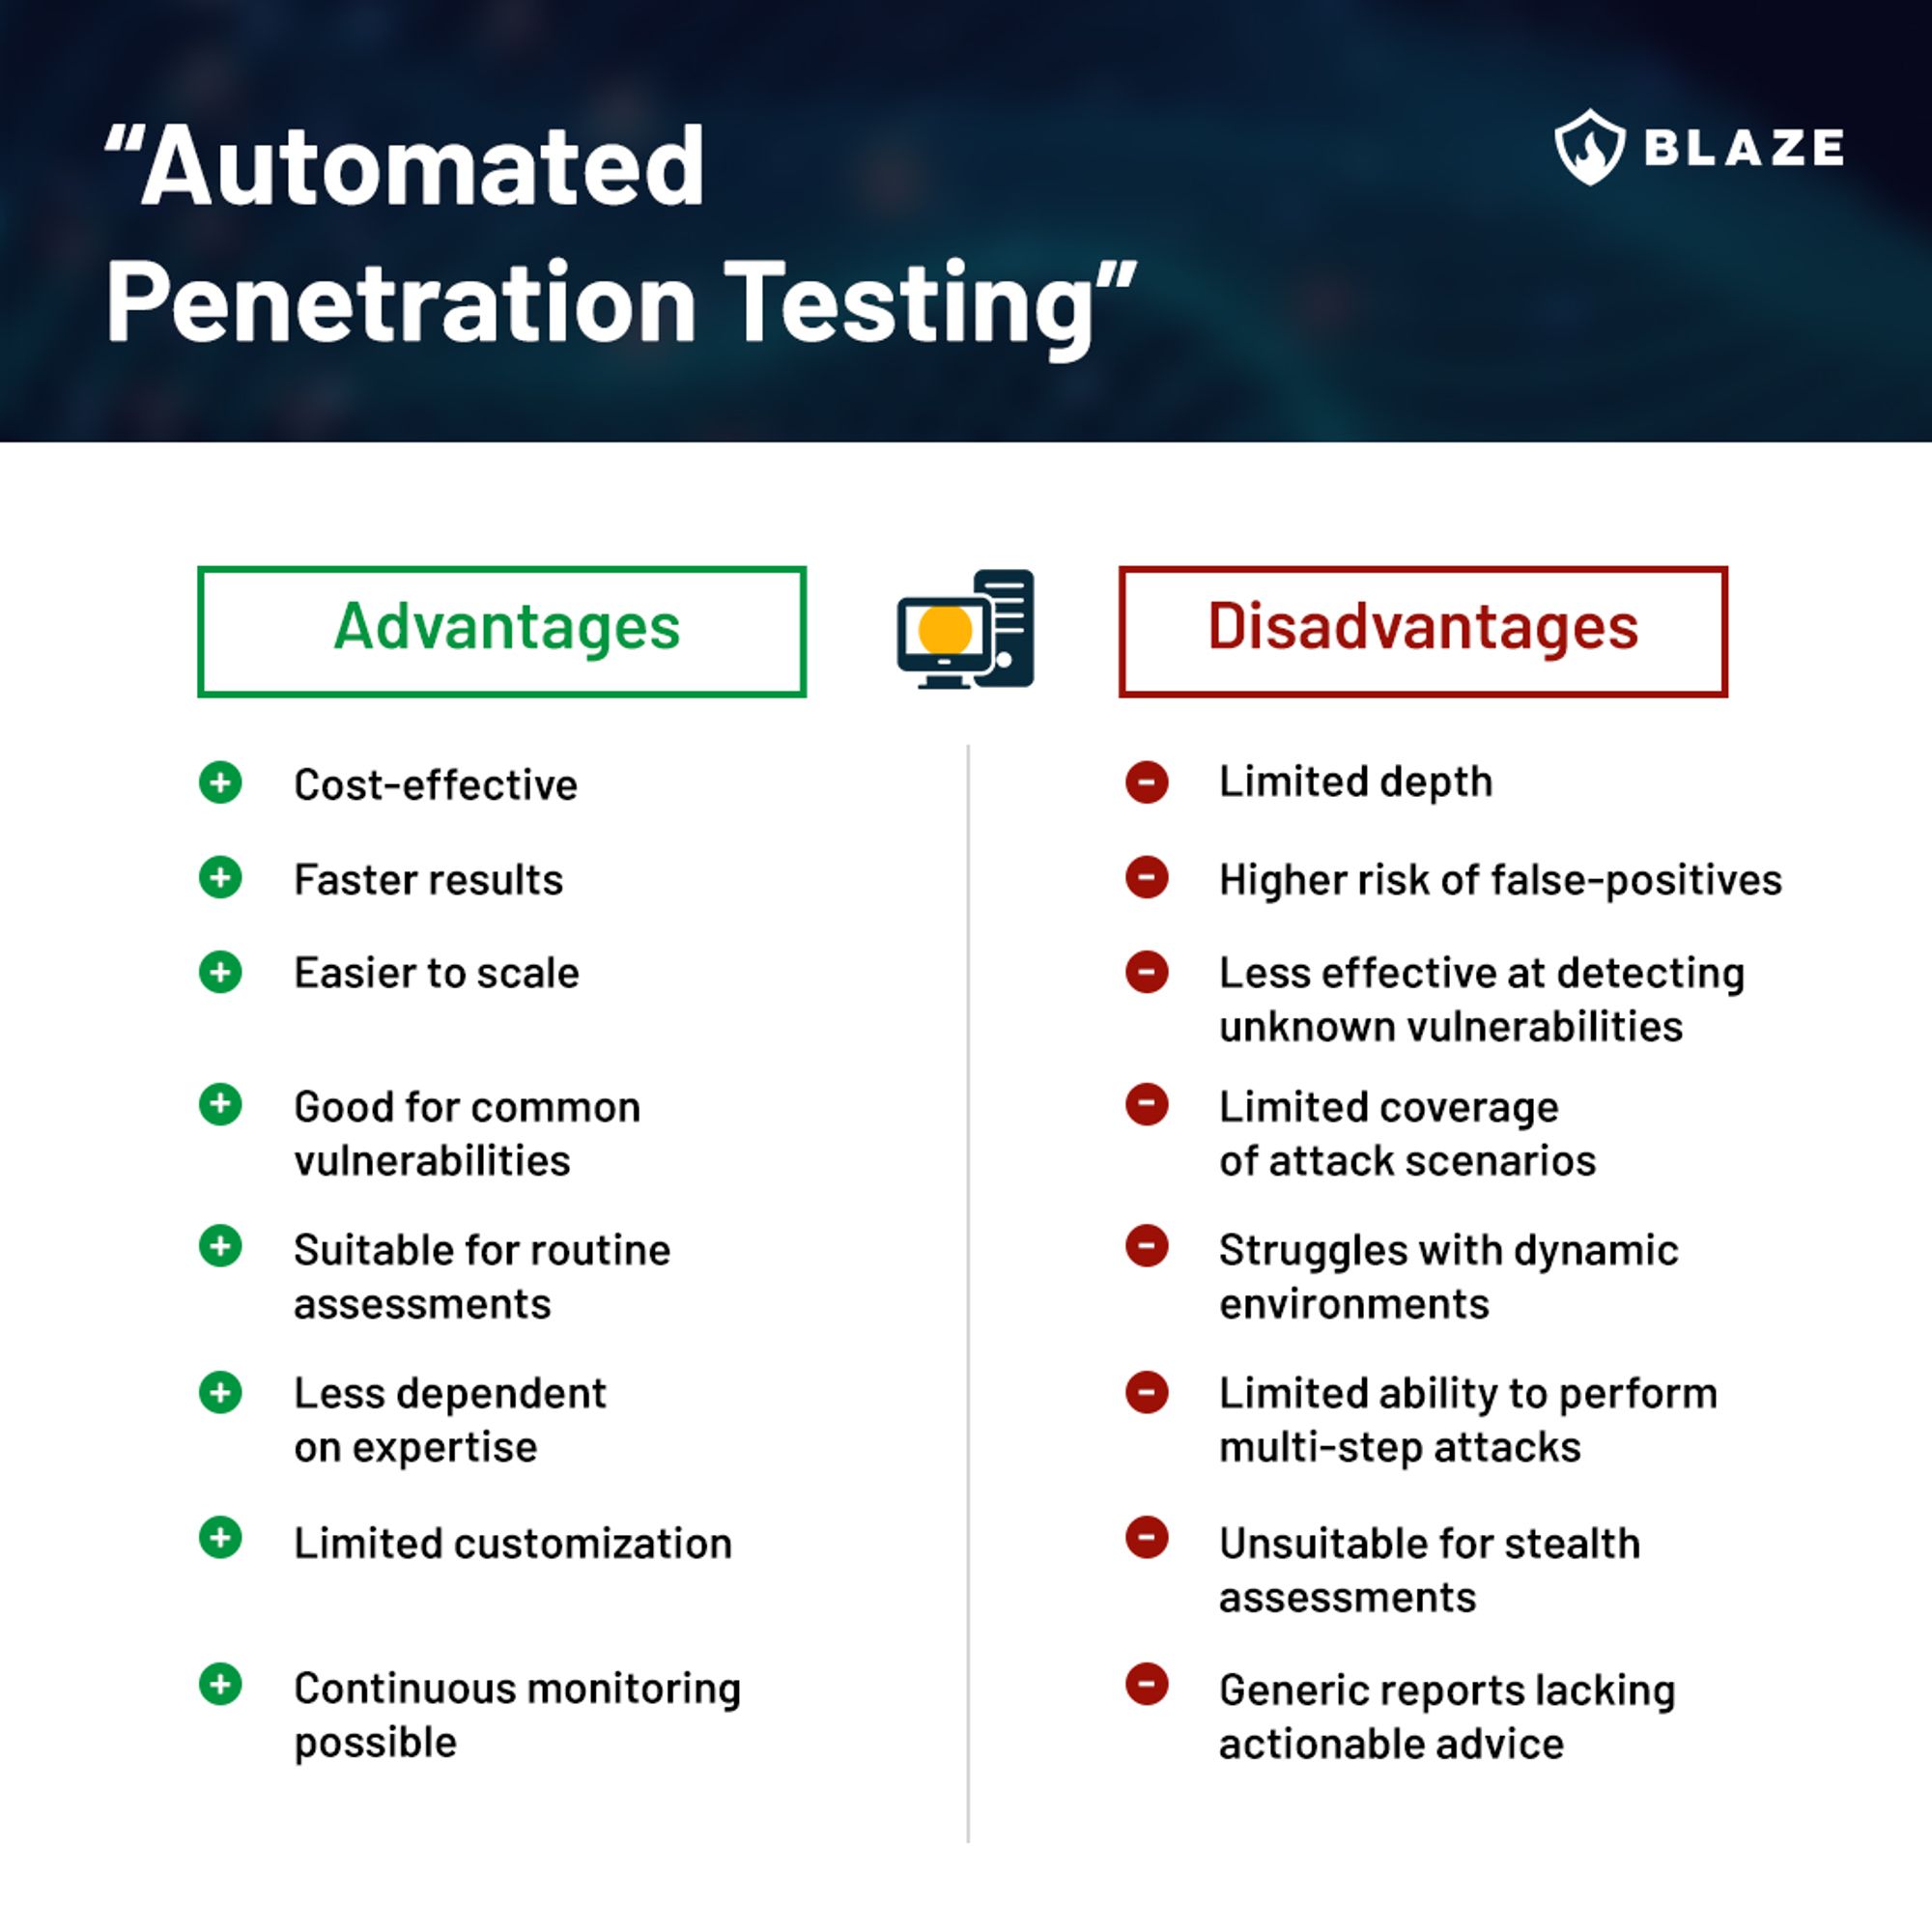 Automated penetration testing disavantages